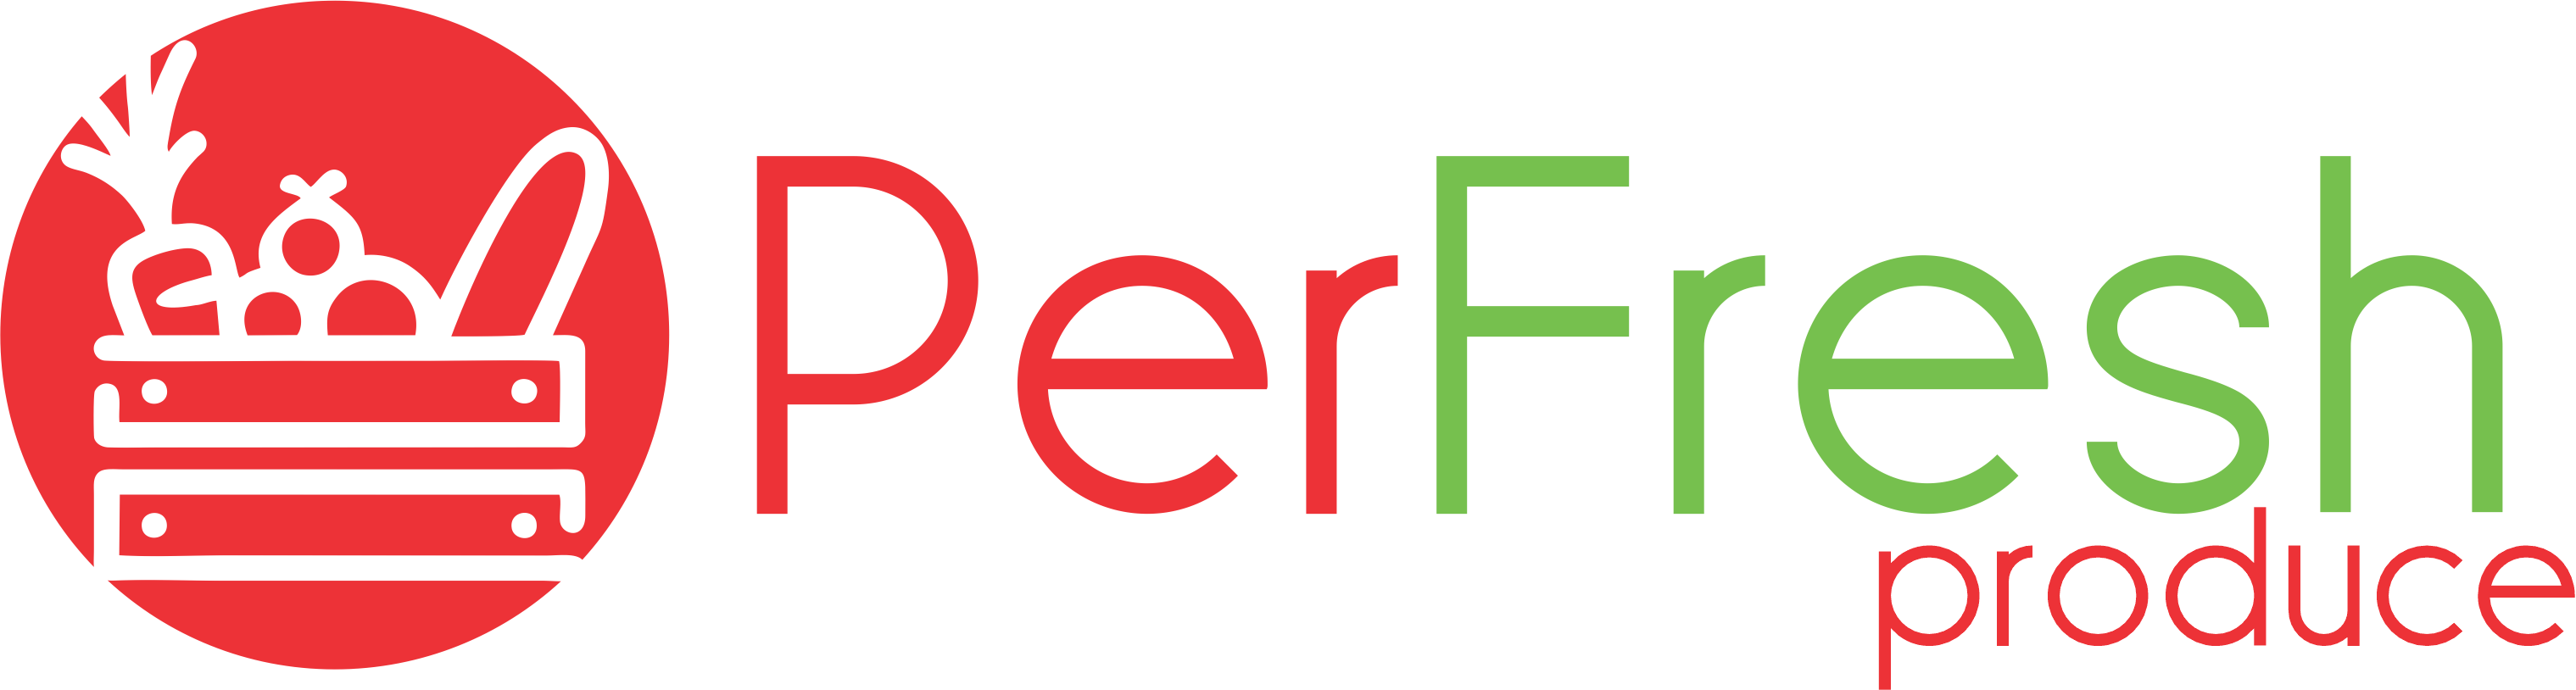 PerFresh Produce Logo